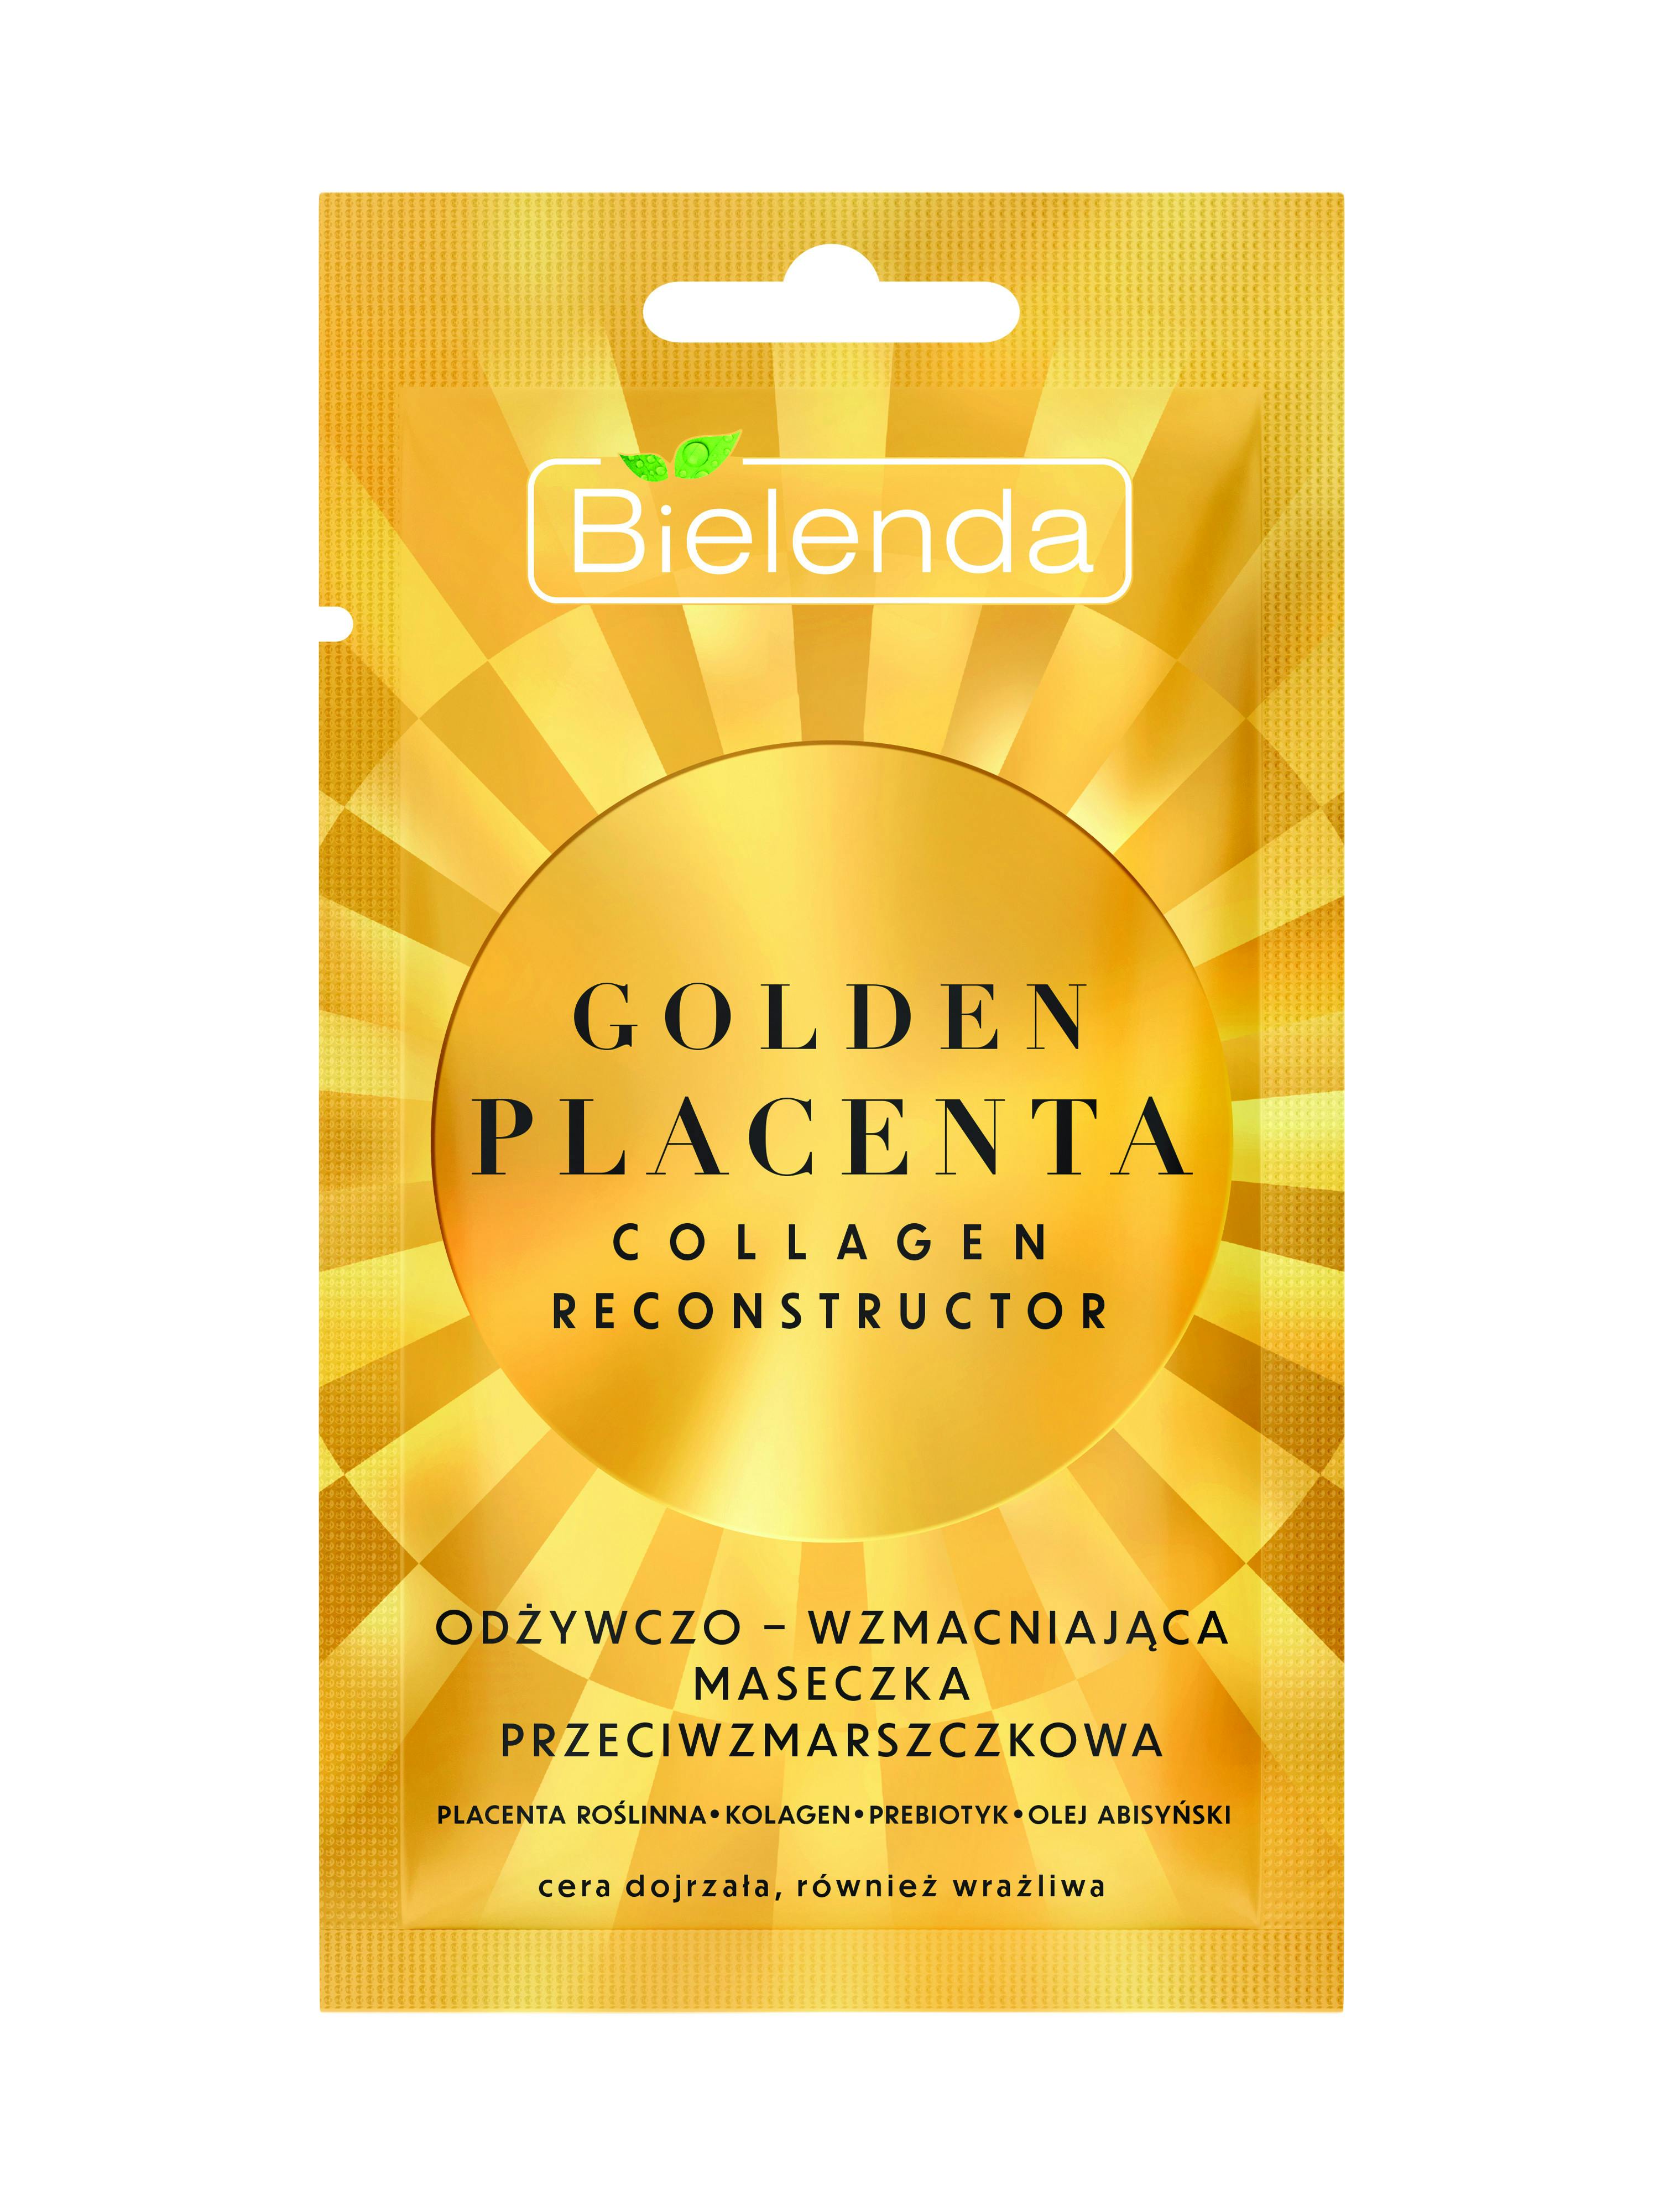 Bielenda Golden Placenta Collagen Reconstructor Anti Wrinkle Mask 8 g